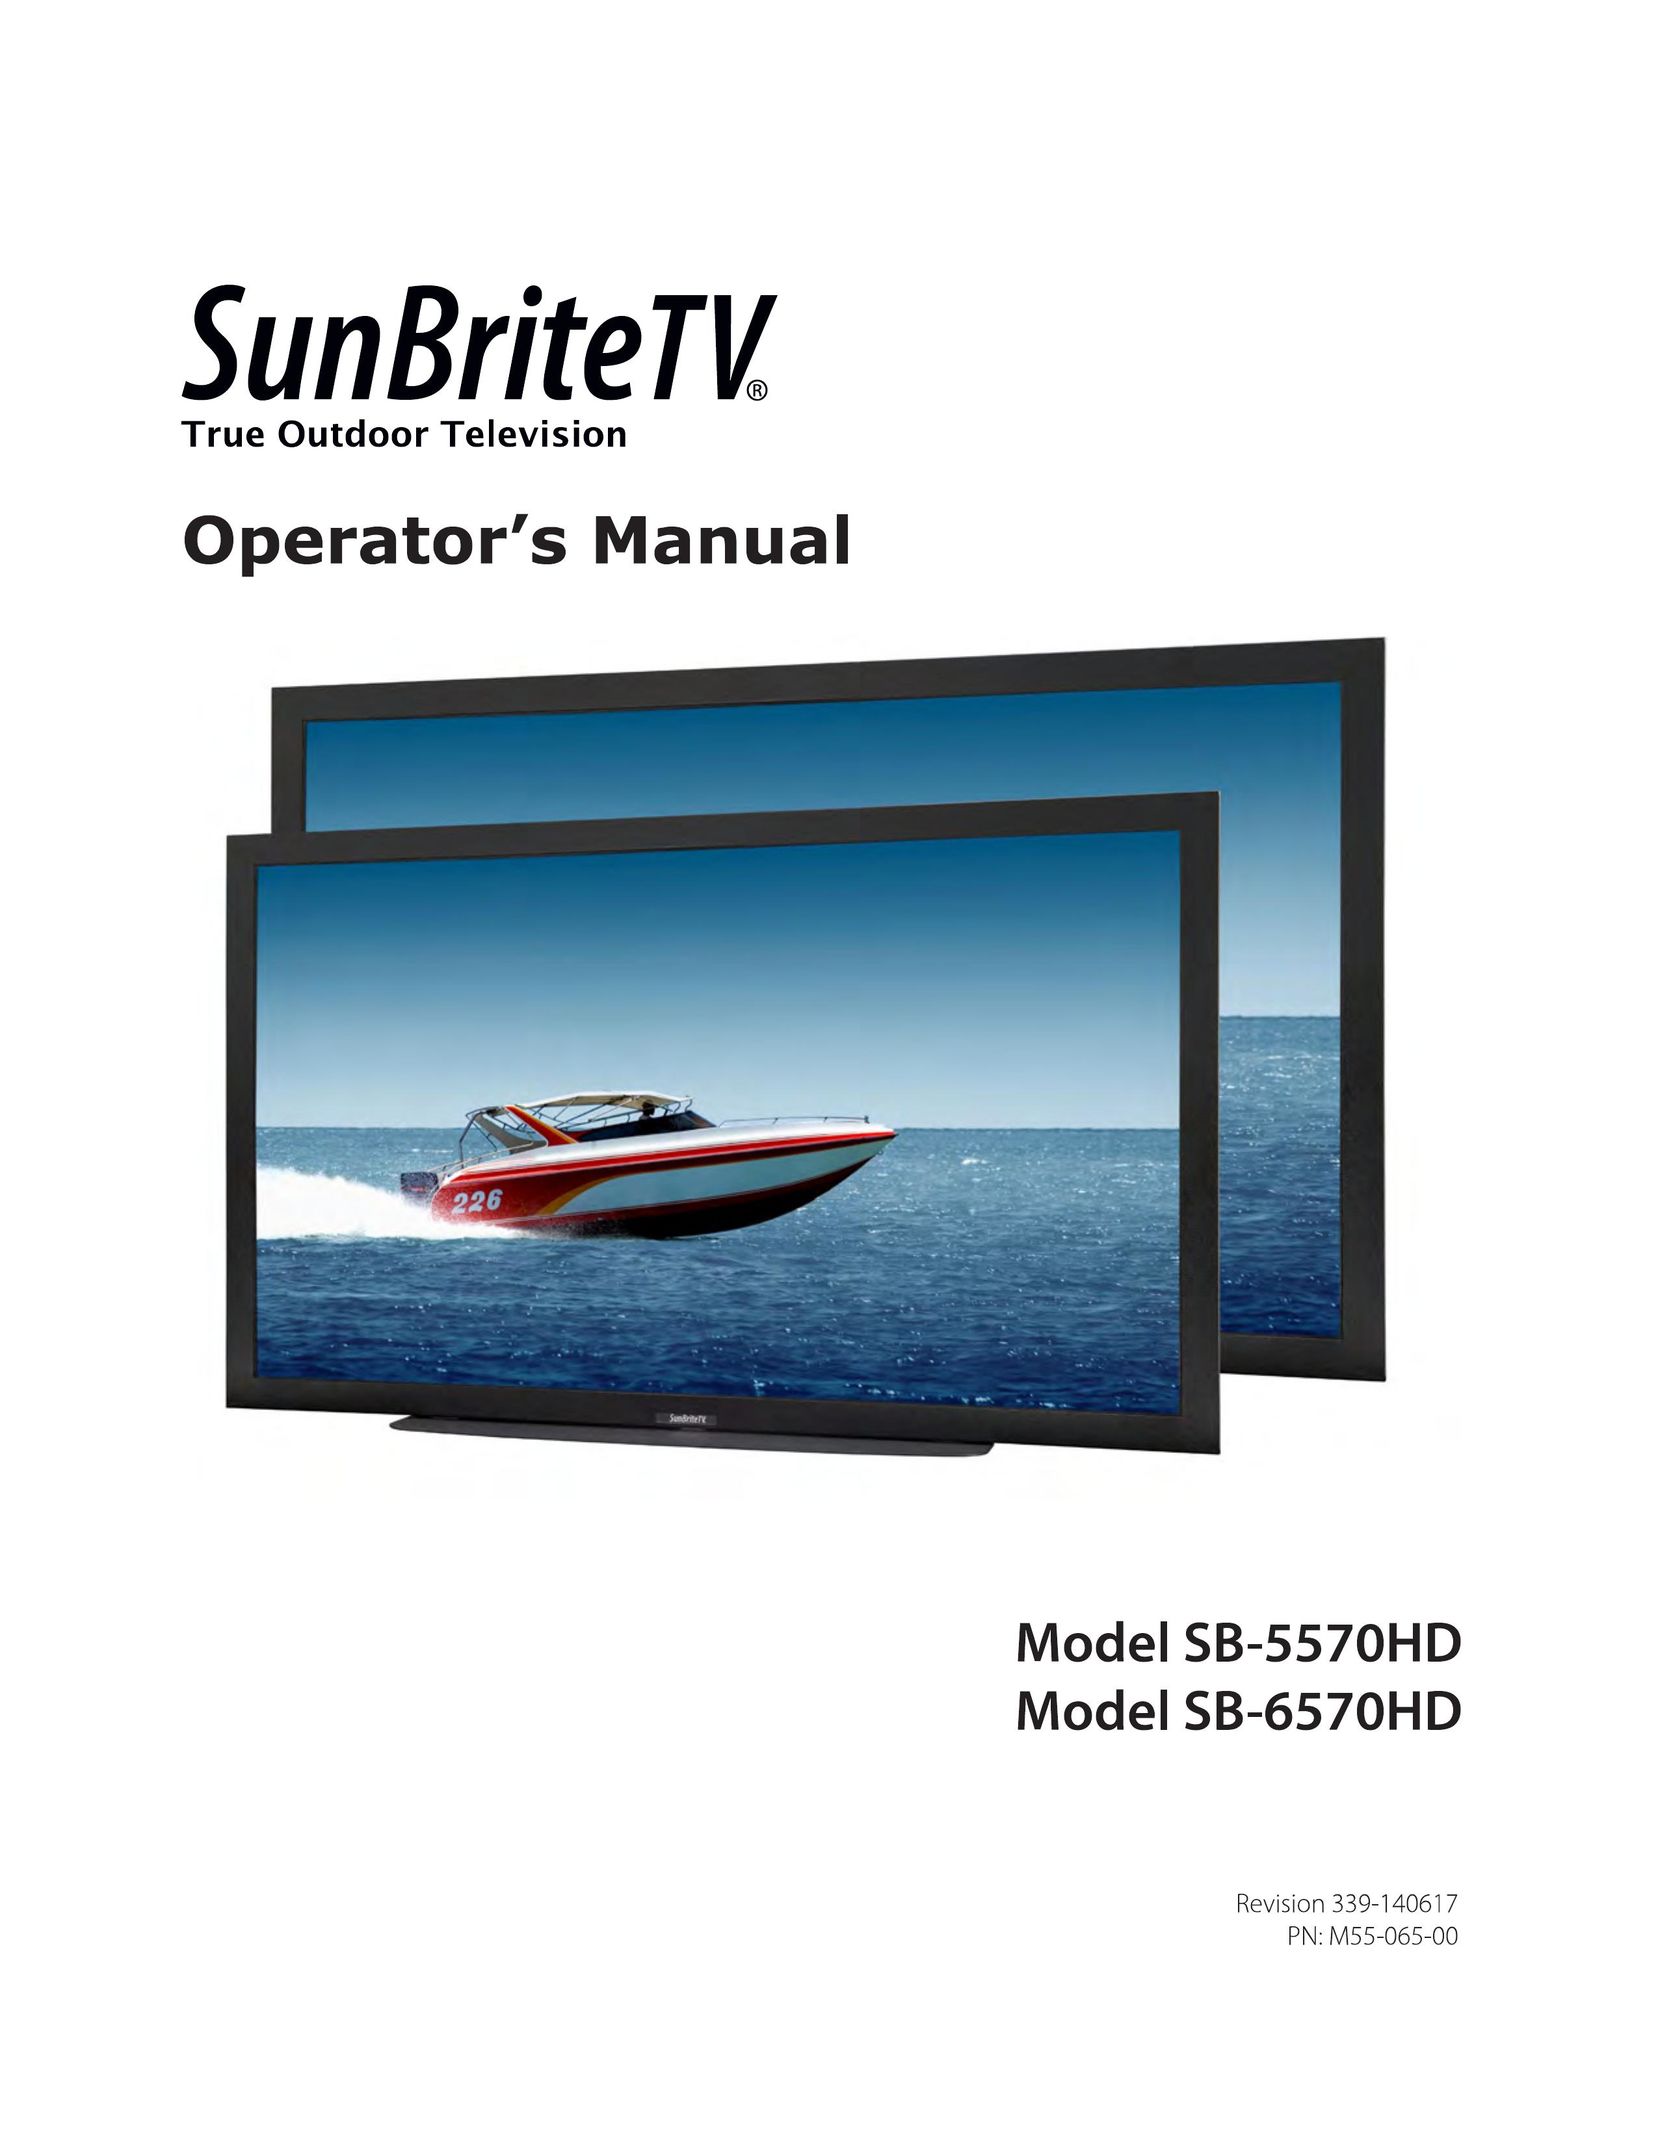 SunBriteTV SB-6570HD CRT Television User Manual